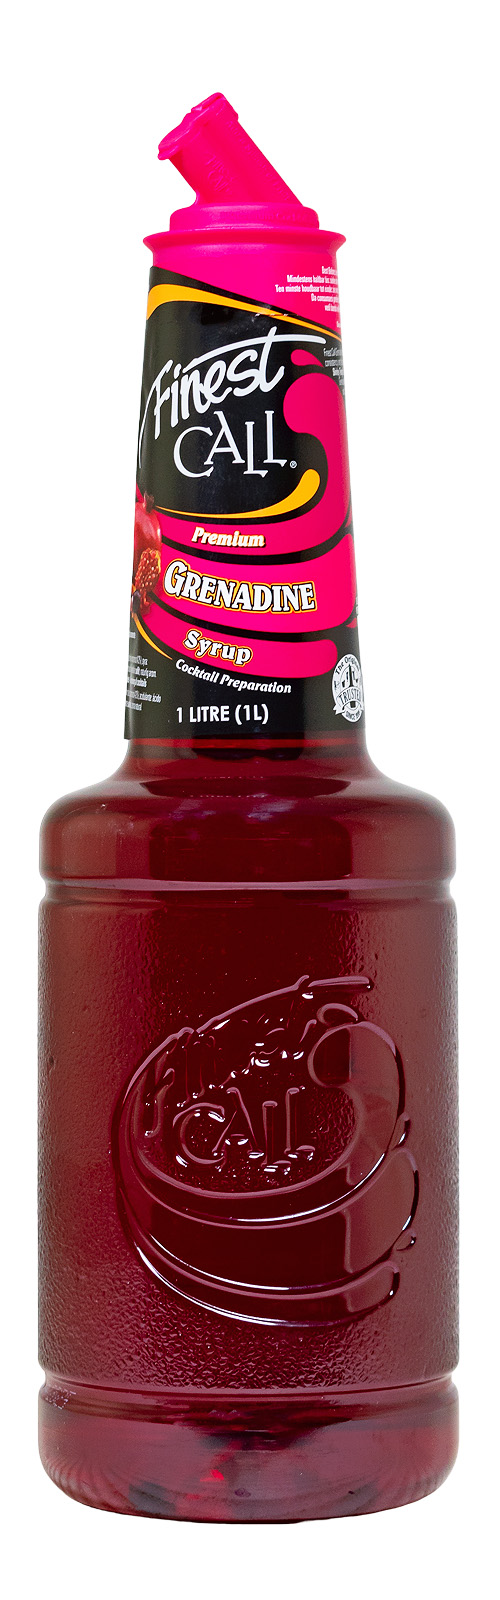 Finest Call Grenadine Sirup - 1 Liter